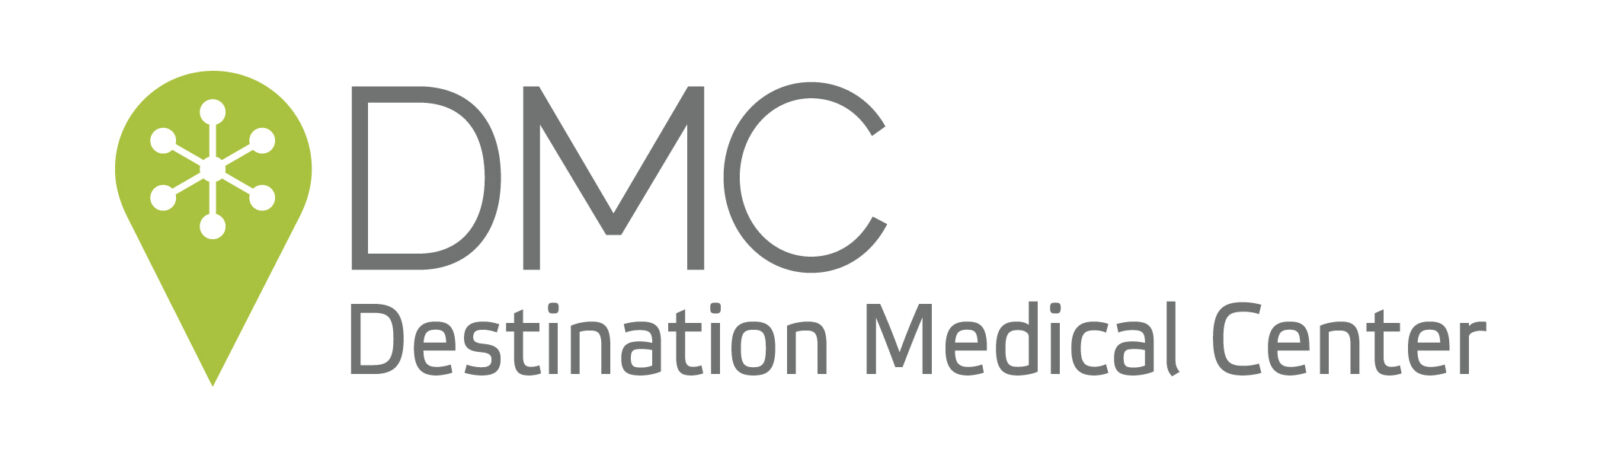 Destination Medical Center logo